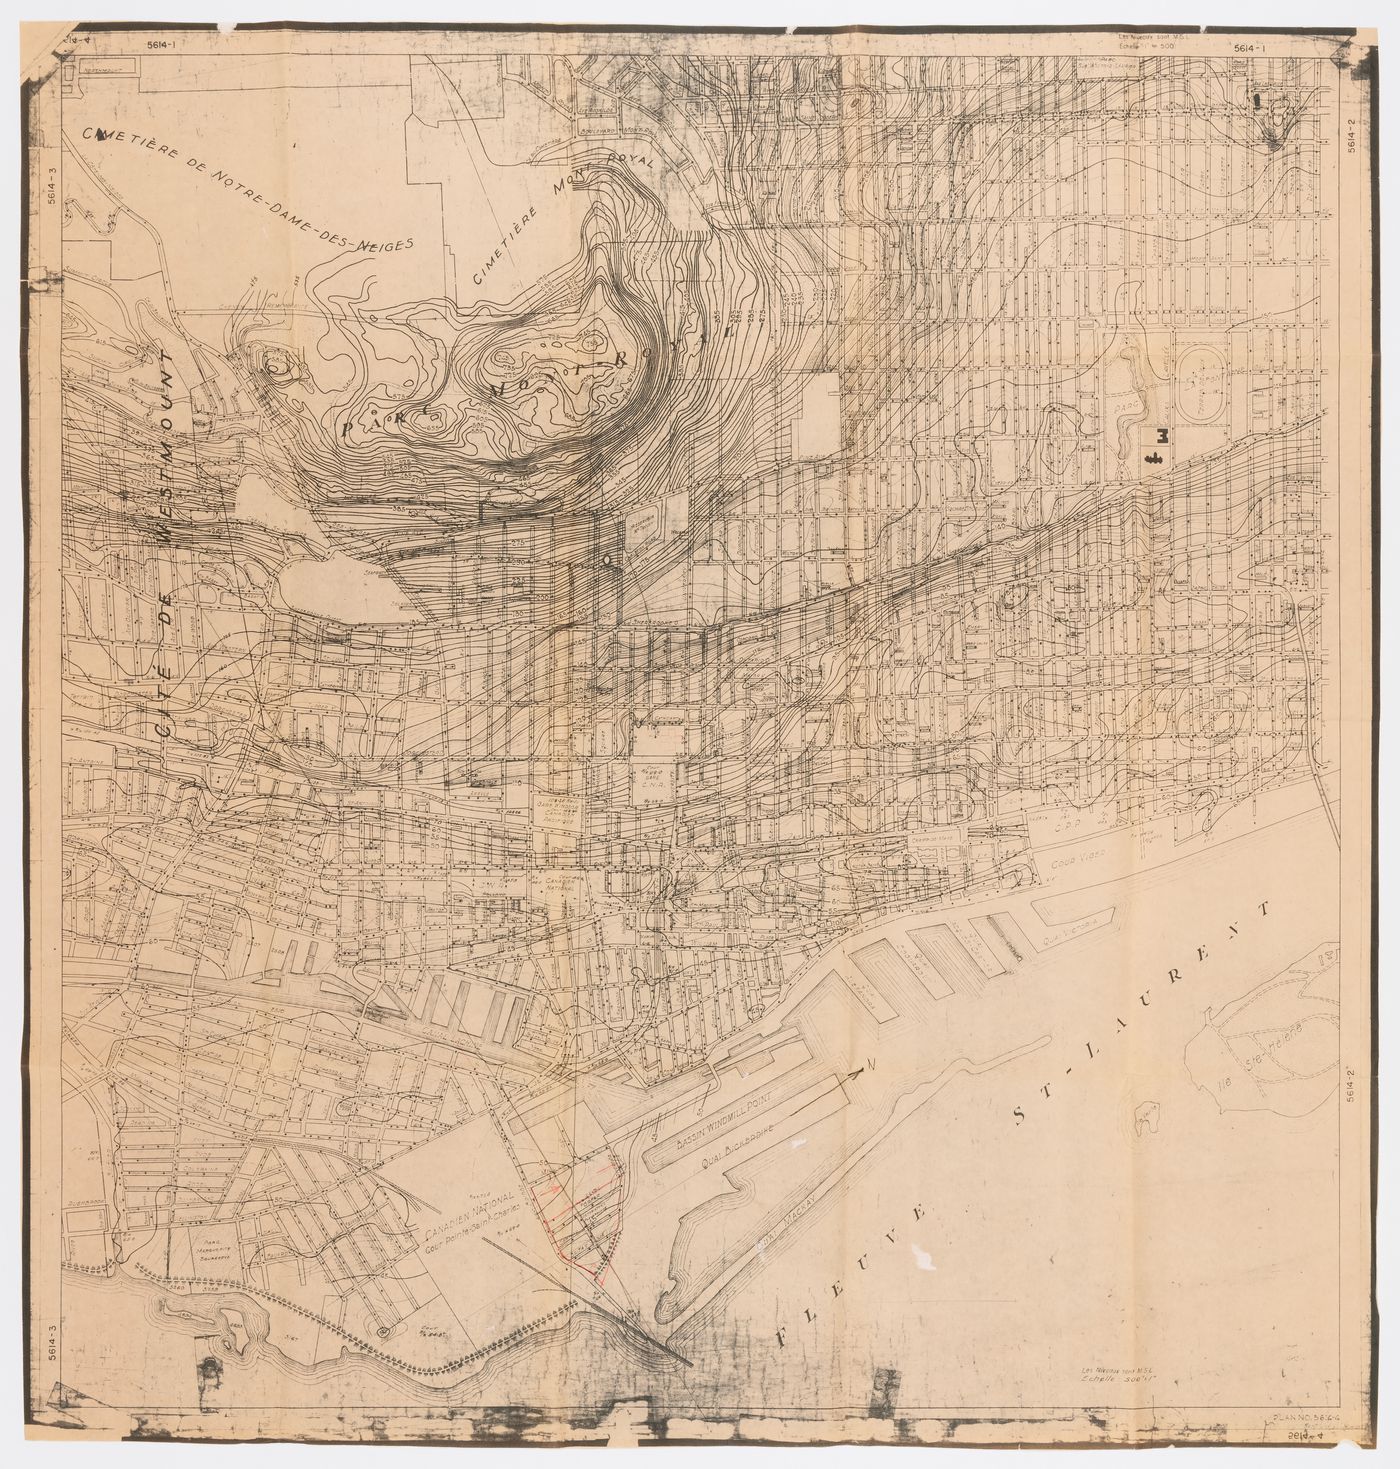 Map of Montréal with site plan for Expo 67 Stadium, Montréal, Québec